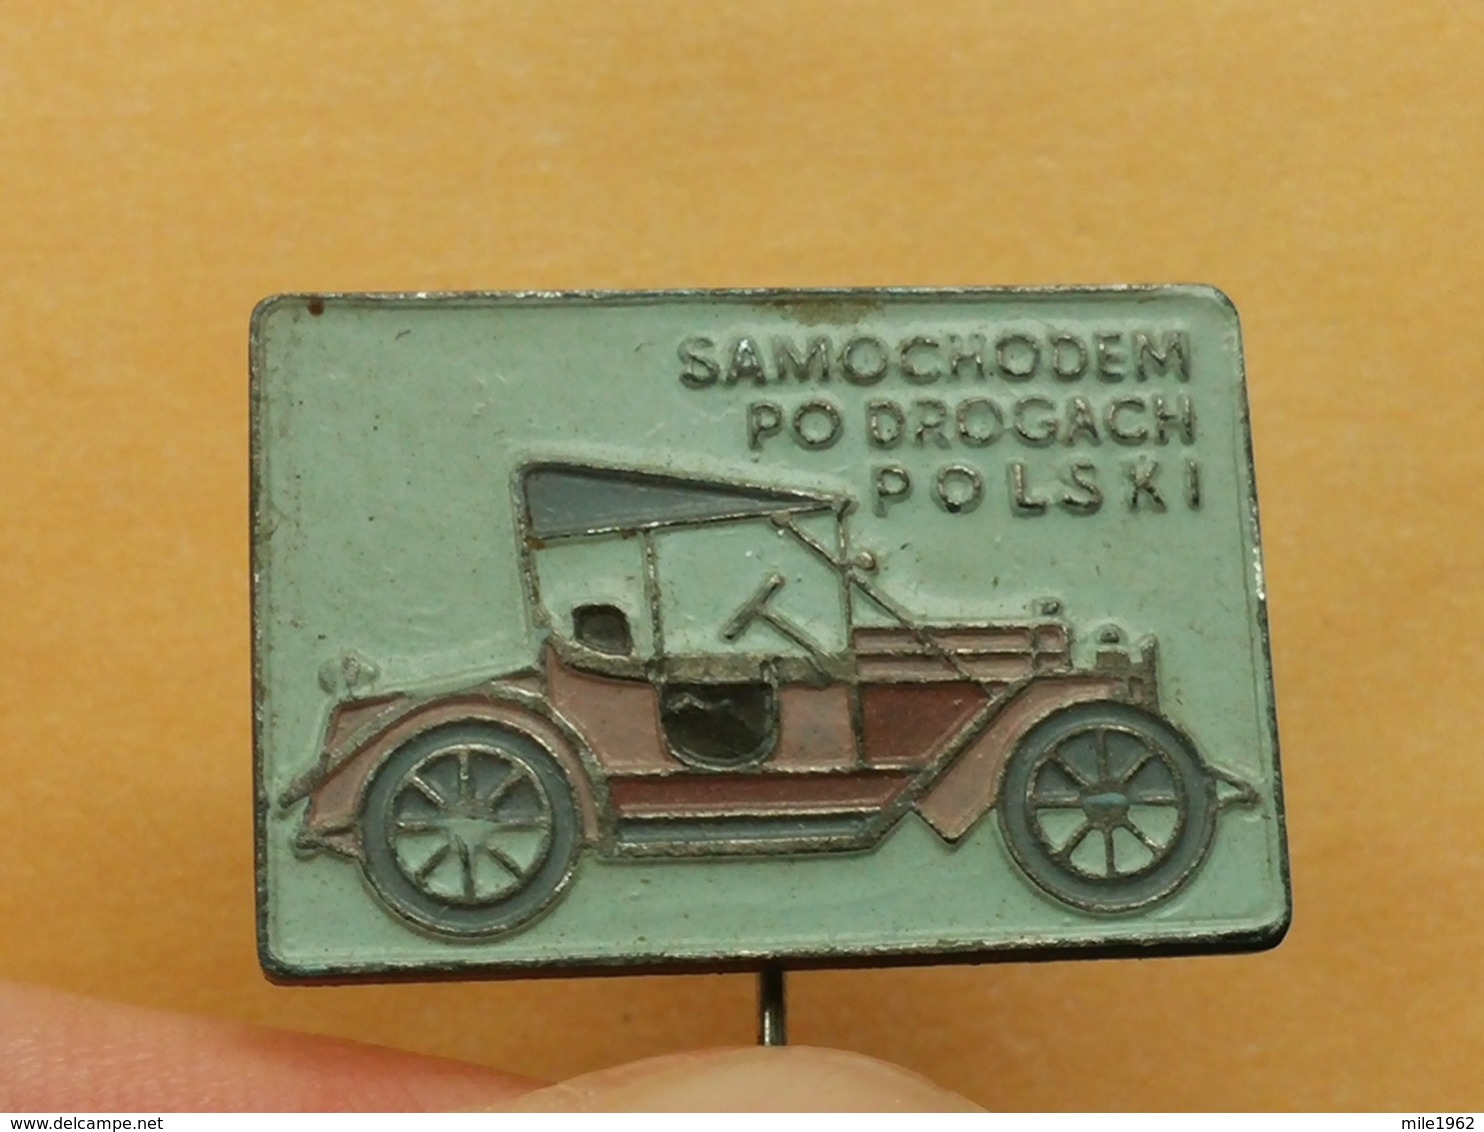 List 105 - FORD 1908 , AUTO CAR OLDTIMER, PRODUCED IN POLAND - Ford